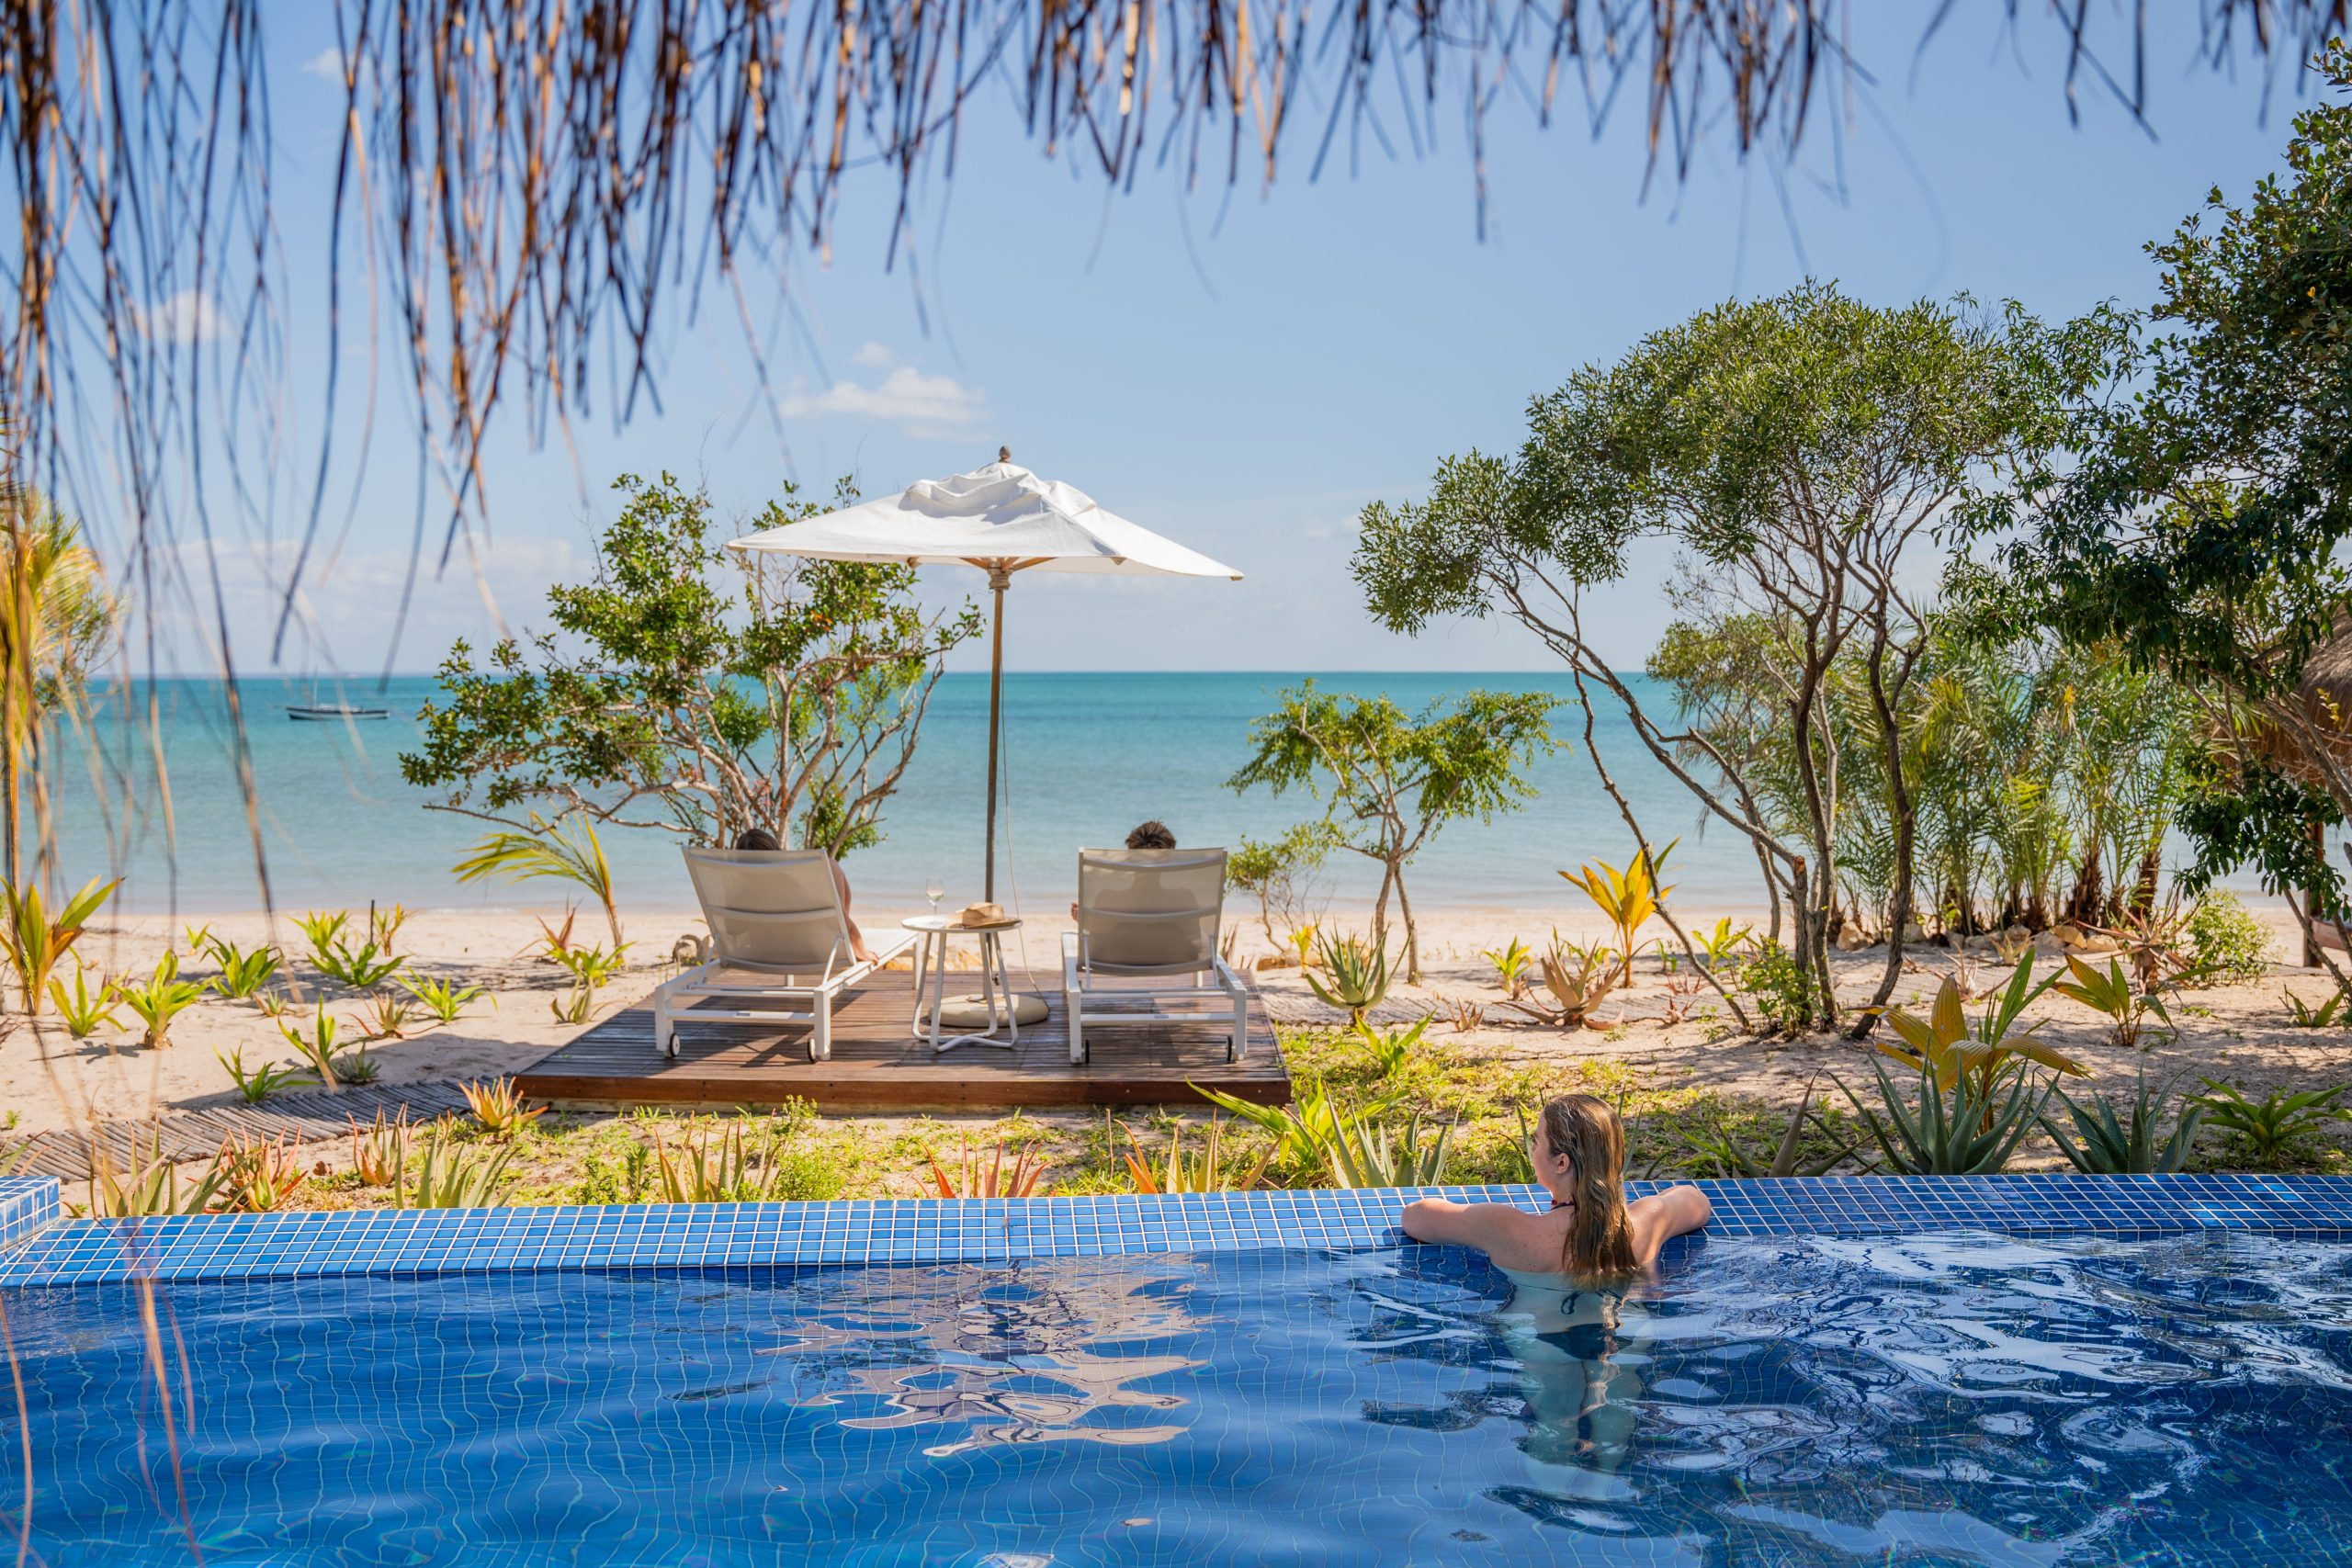 AZURA RETREATS Azura Benguerra Royal Beach Villa 10m rim flow infinity pool scaled - Ganders Travel